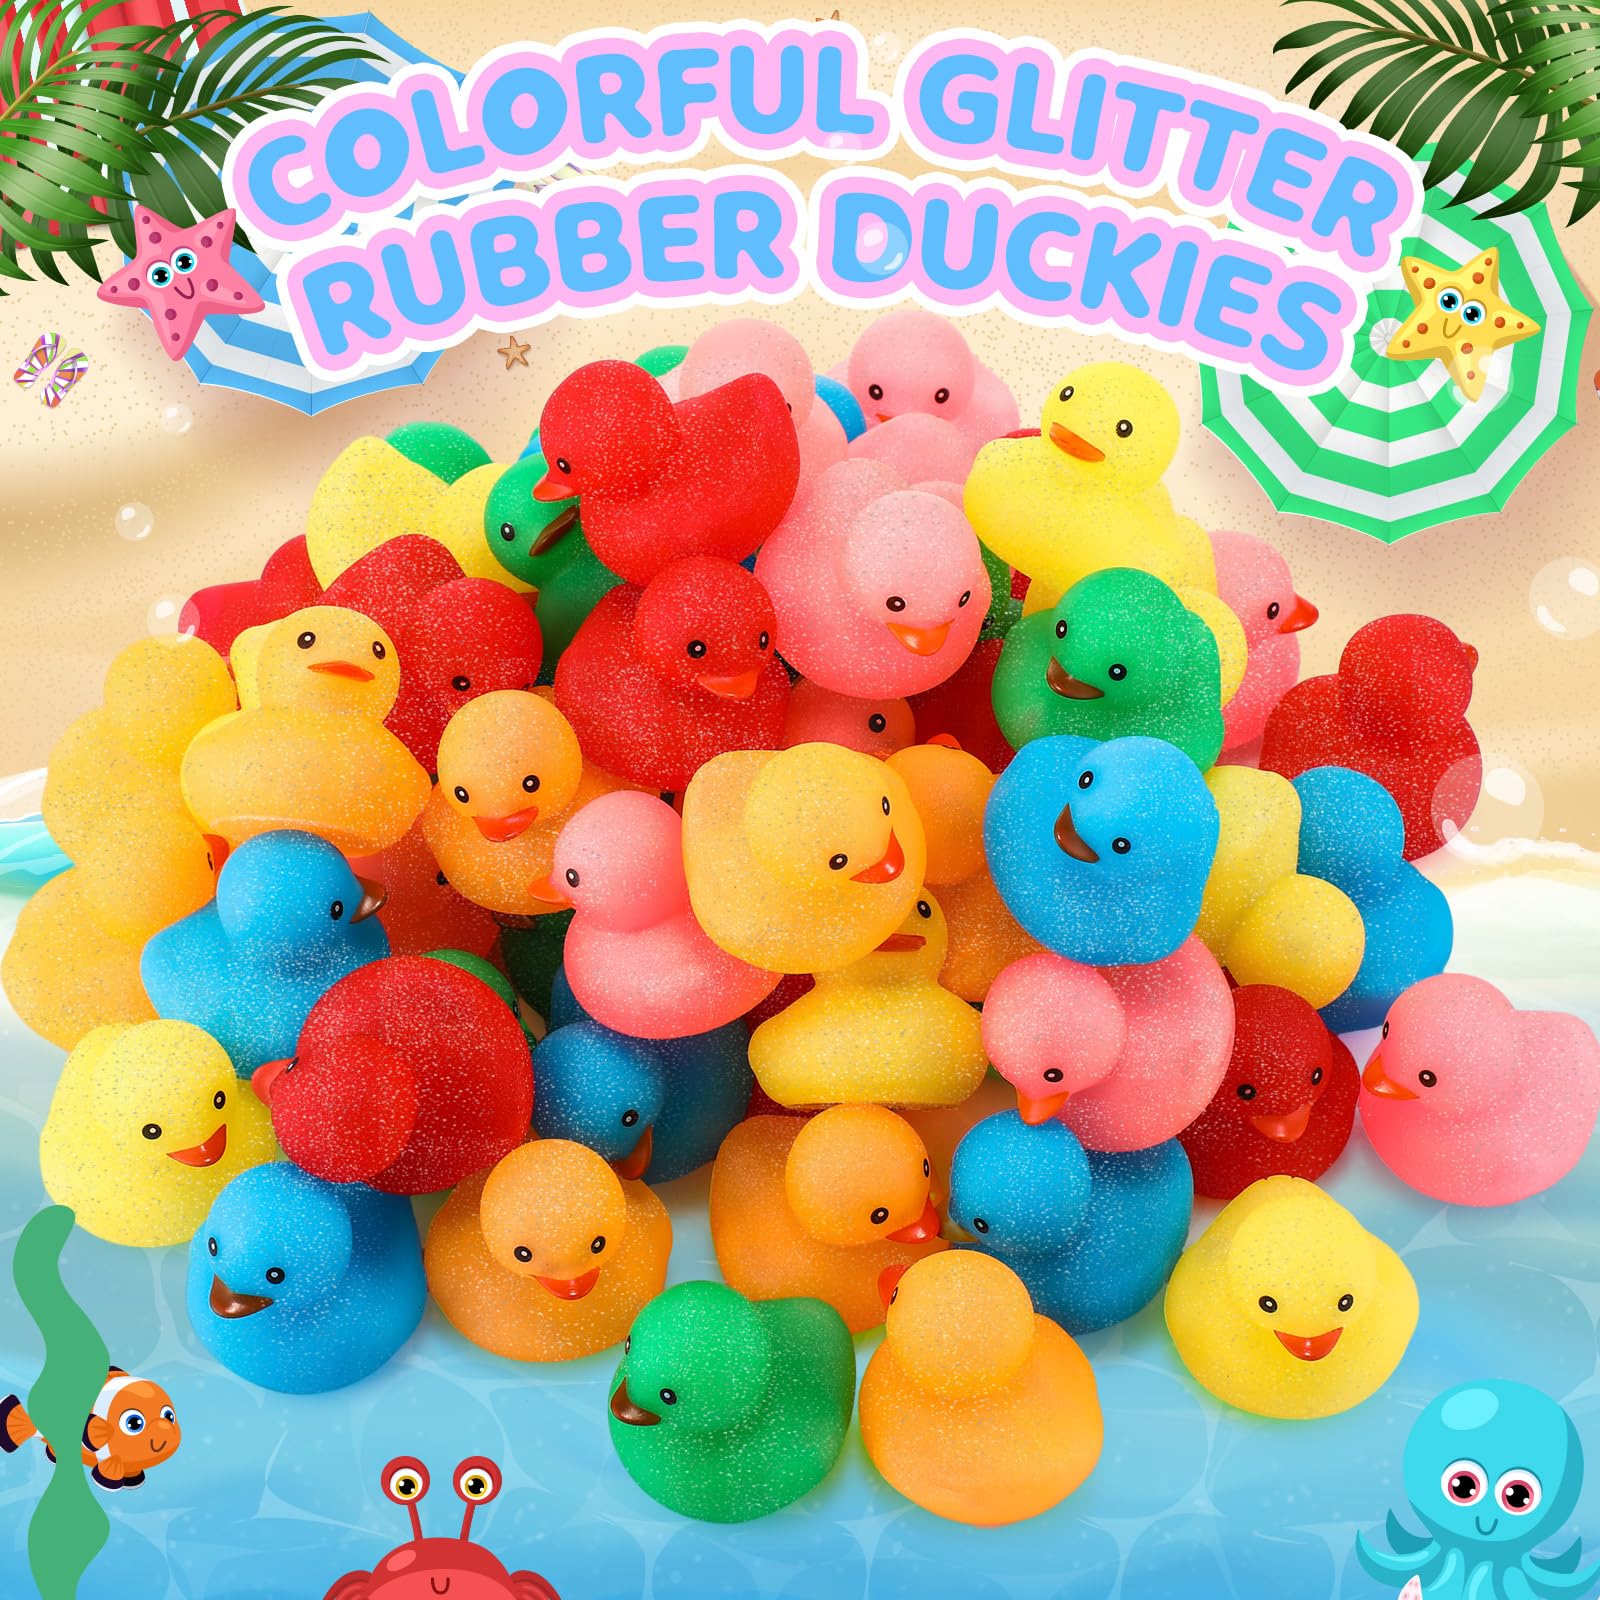 Syhood 60 Pcs Glitter Rubber Ducks 2